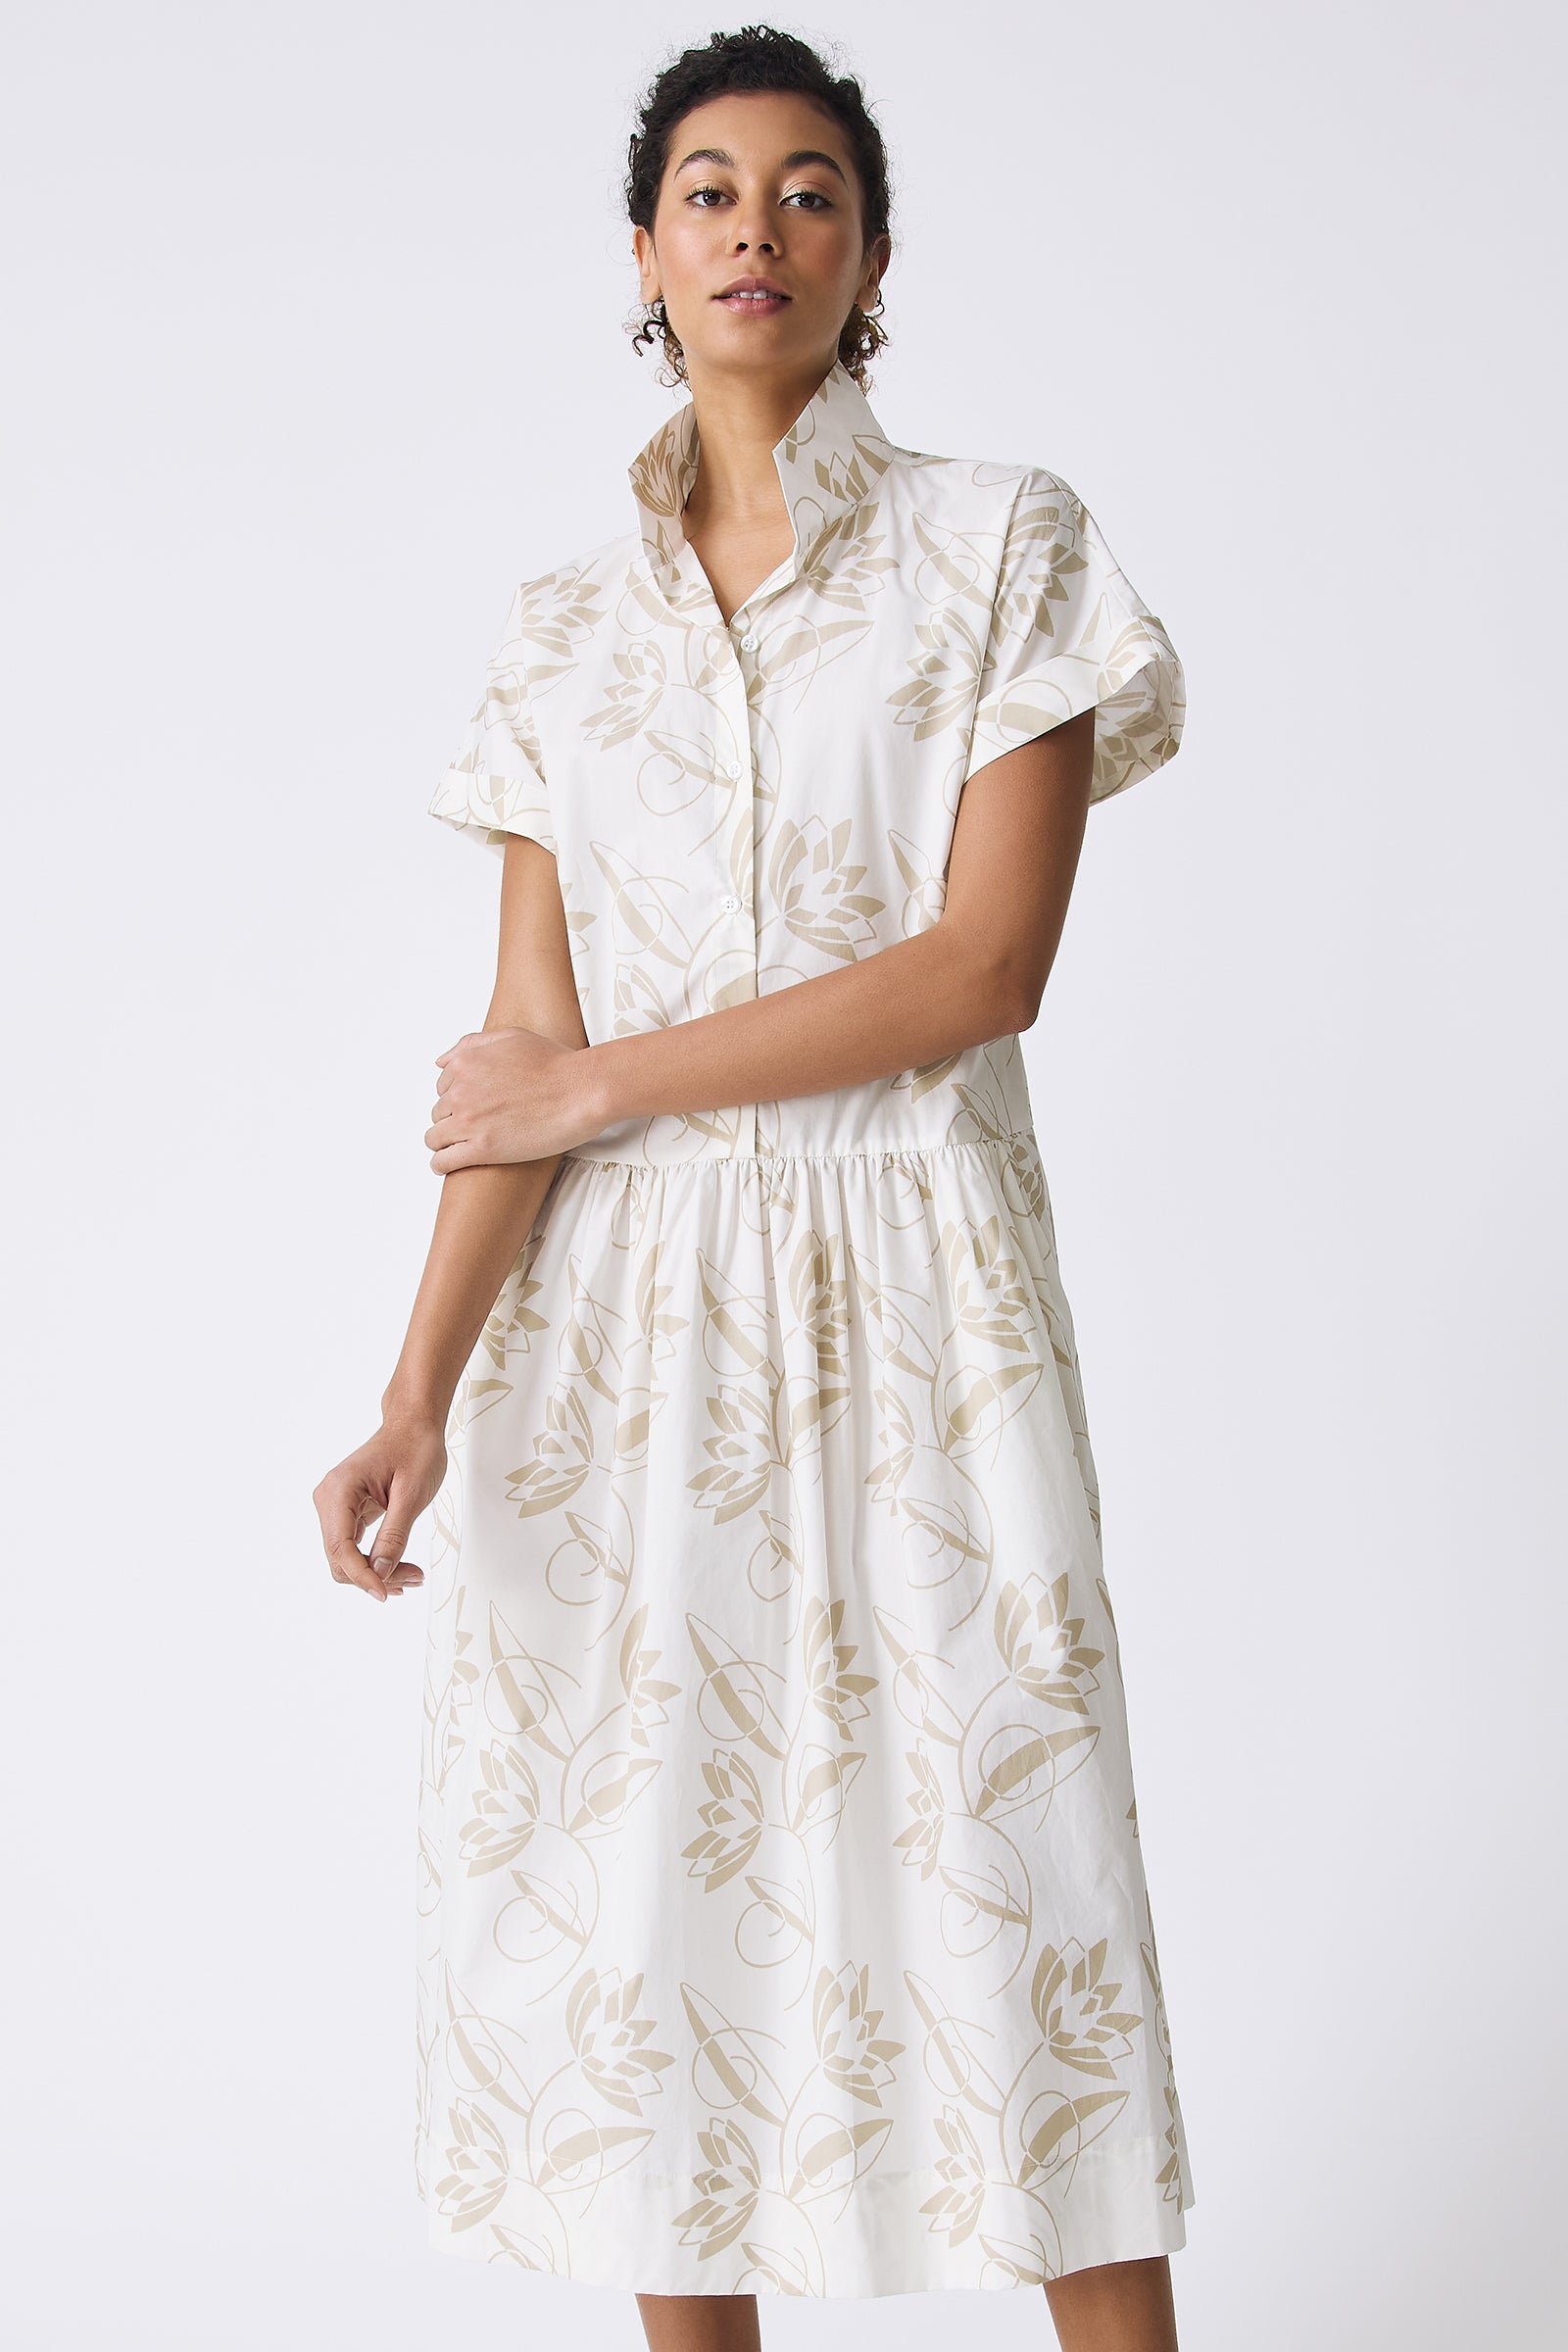 Kal Rieman Tanya Shirt Dress in Lotus Print on model holding arm front view